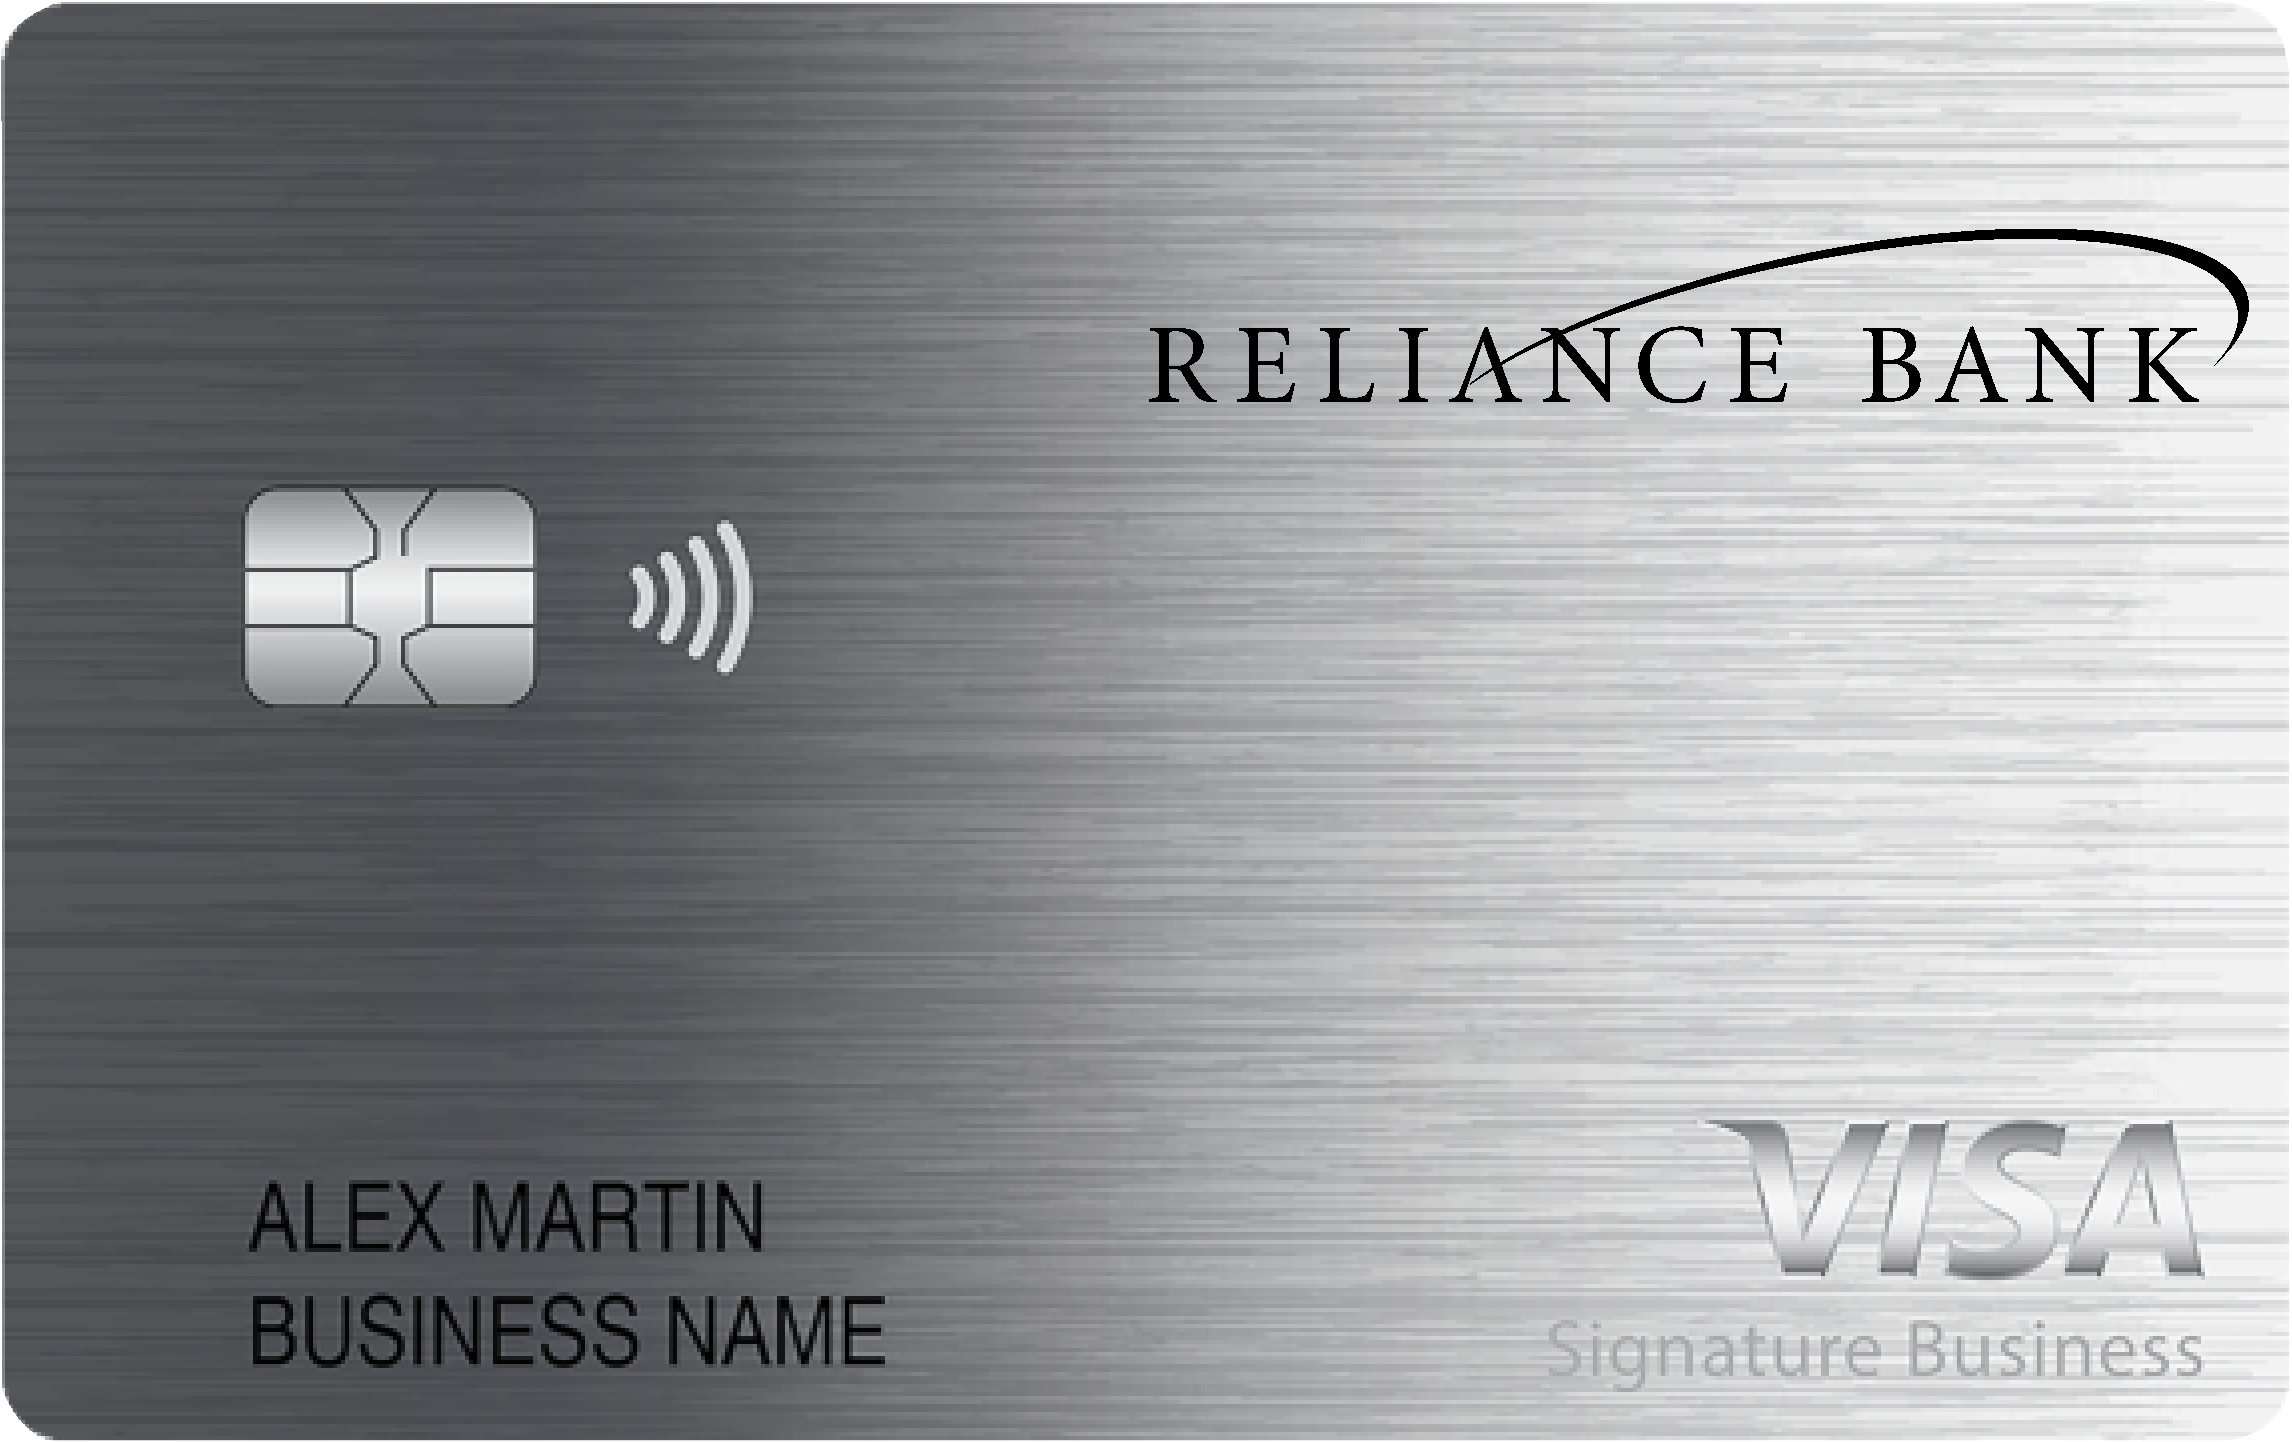 Reliance Bank Smart Business Rewards Card